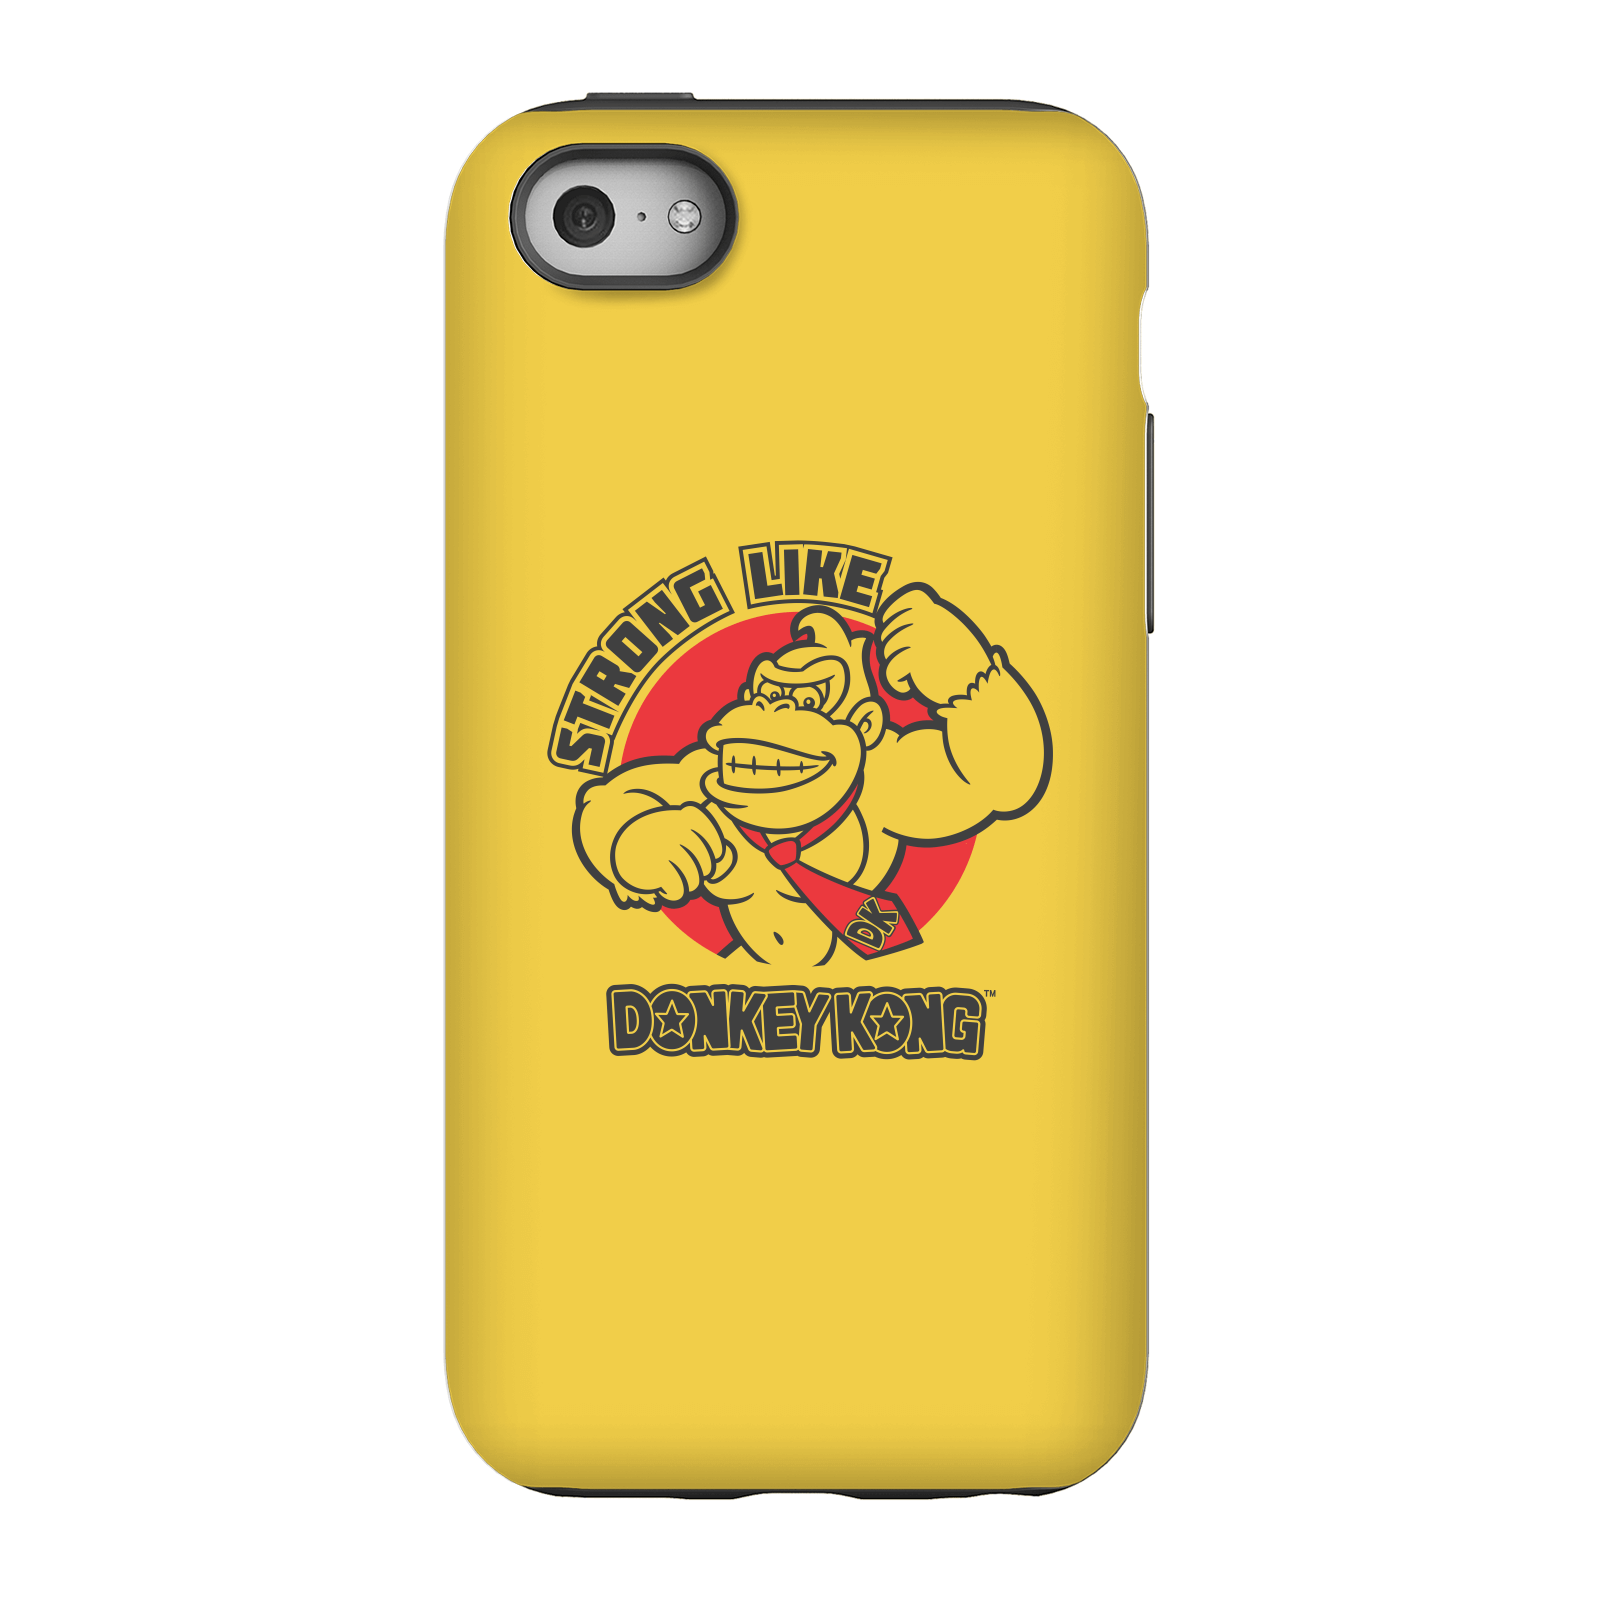 Nintendo Donkey Kong Strong Like Donkey Kong Phone Case - iPhone 5C - Tough Case - Gloss